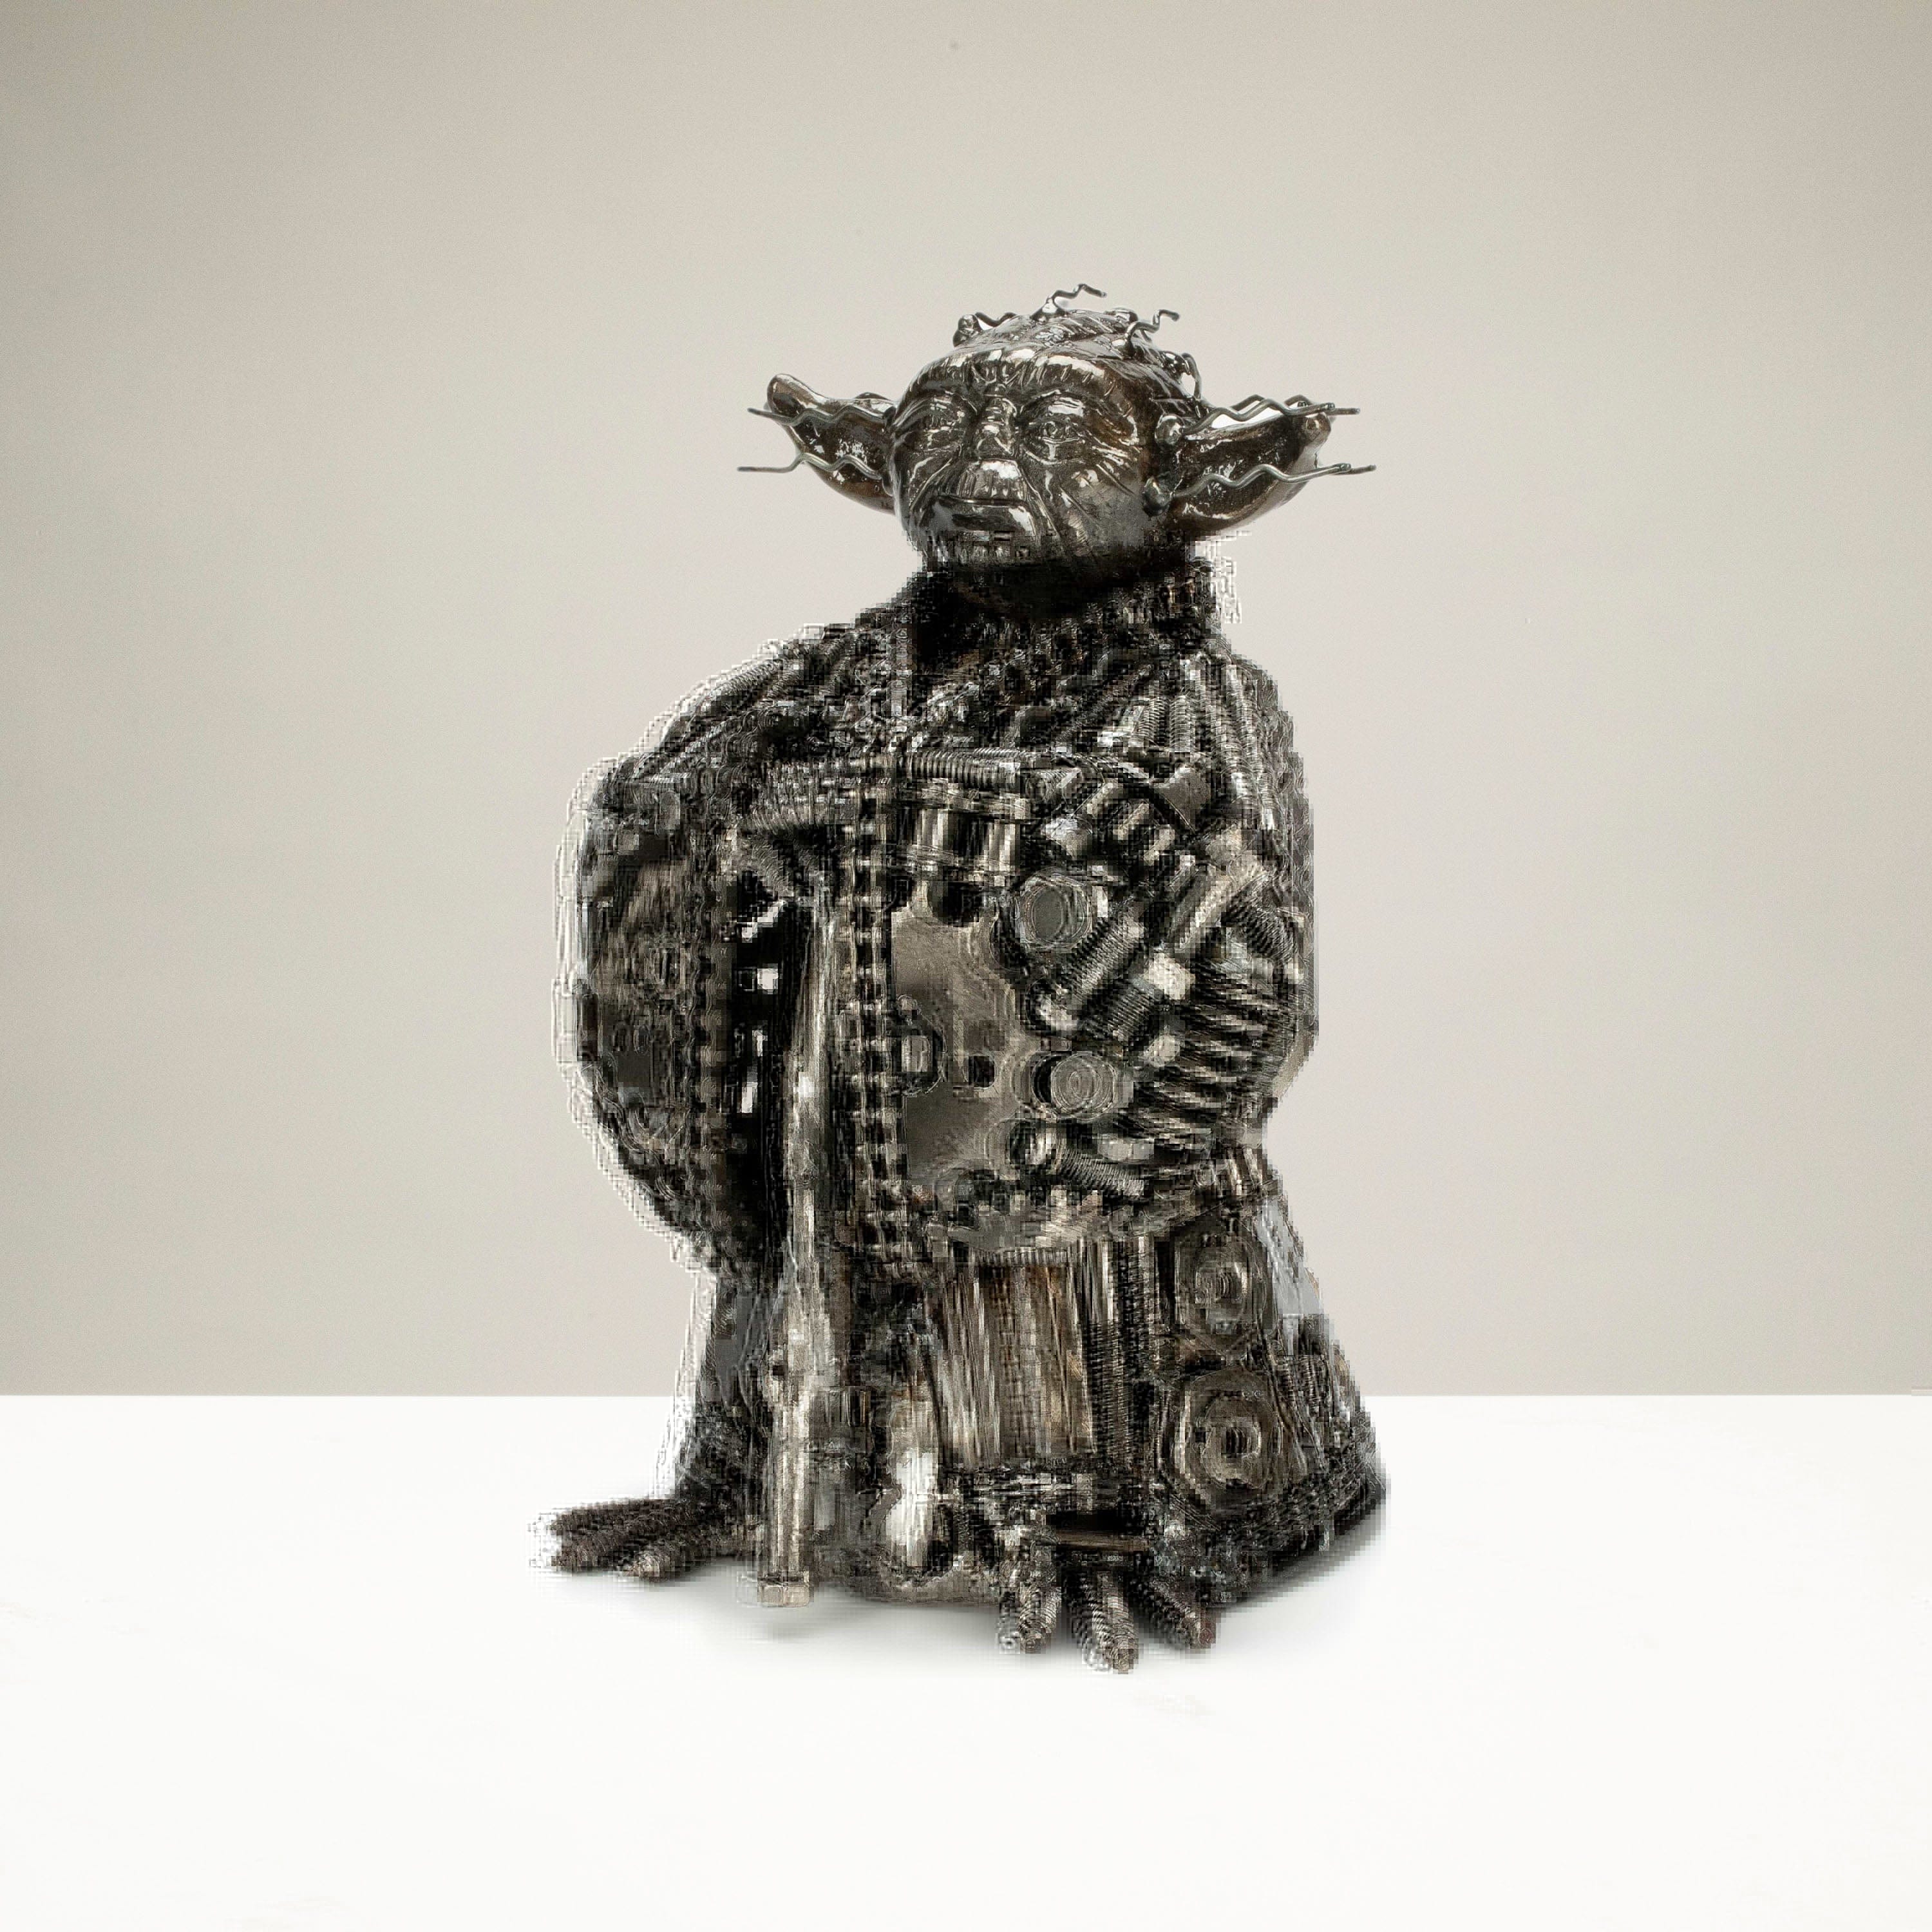 KALIFANO Recycled Metal Art Yoda Inspired Recycled Metal Art Sculpture RMS-1500Y-PK